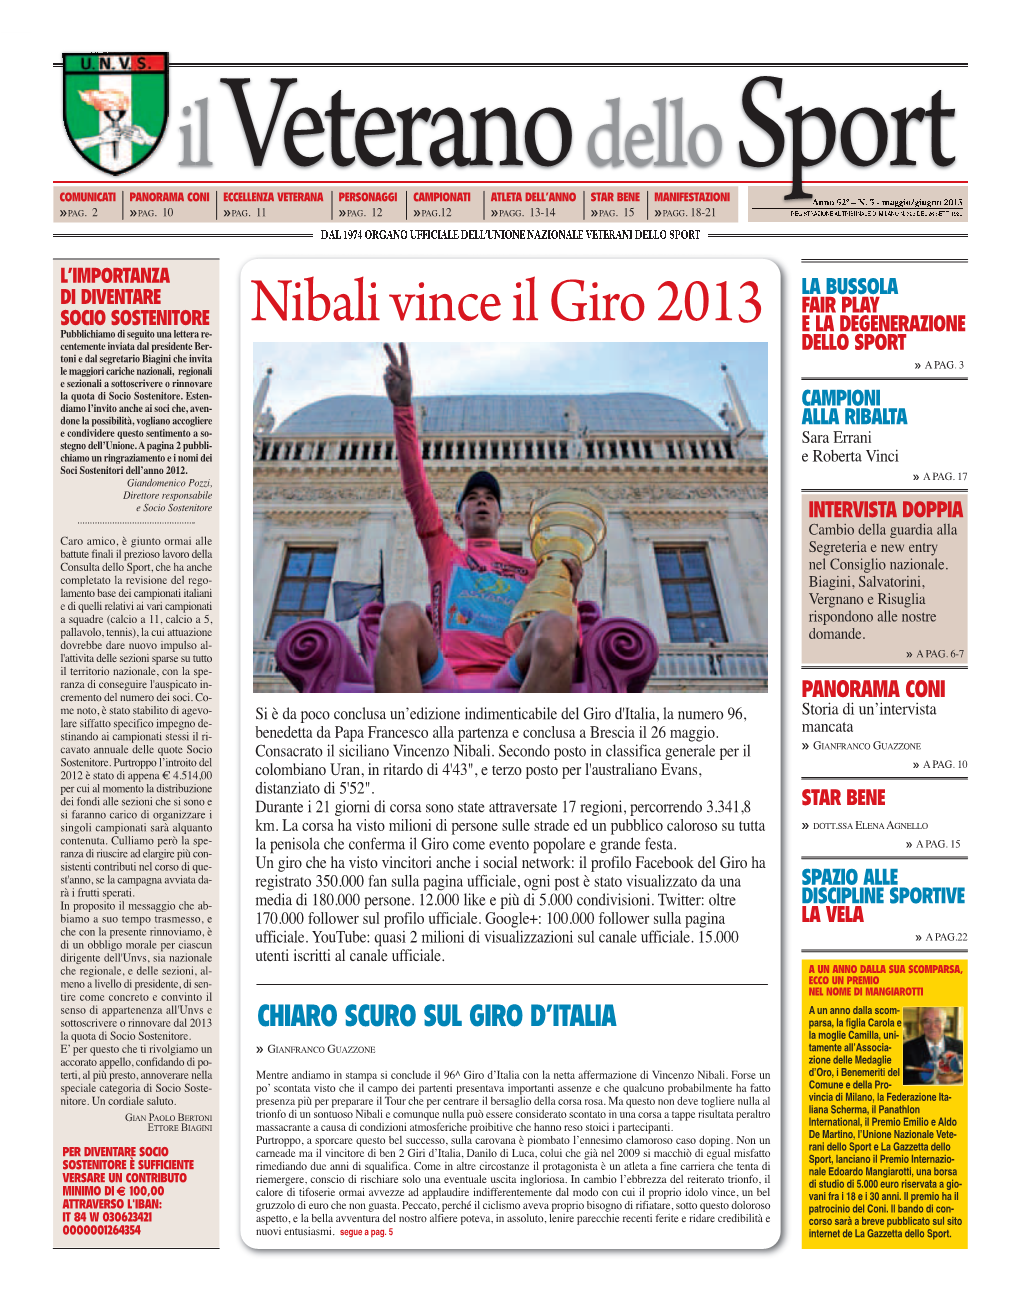 Nibali Vince Il Giro 2013